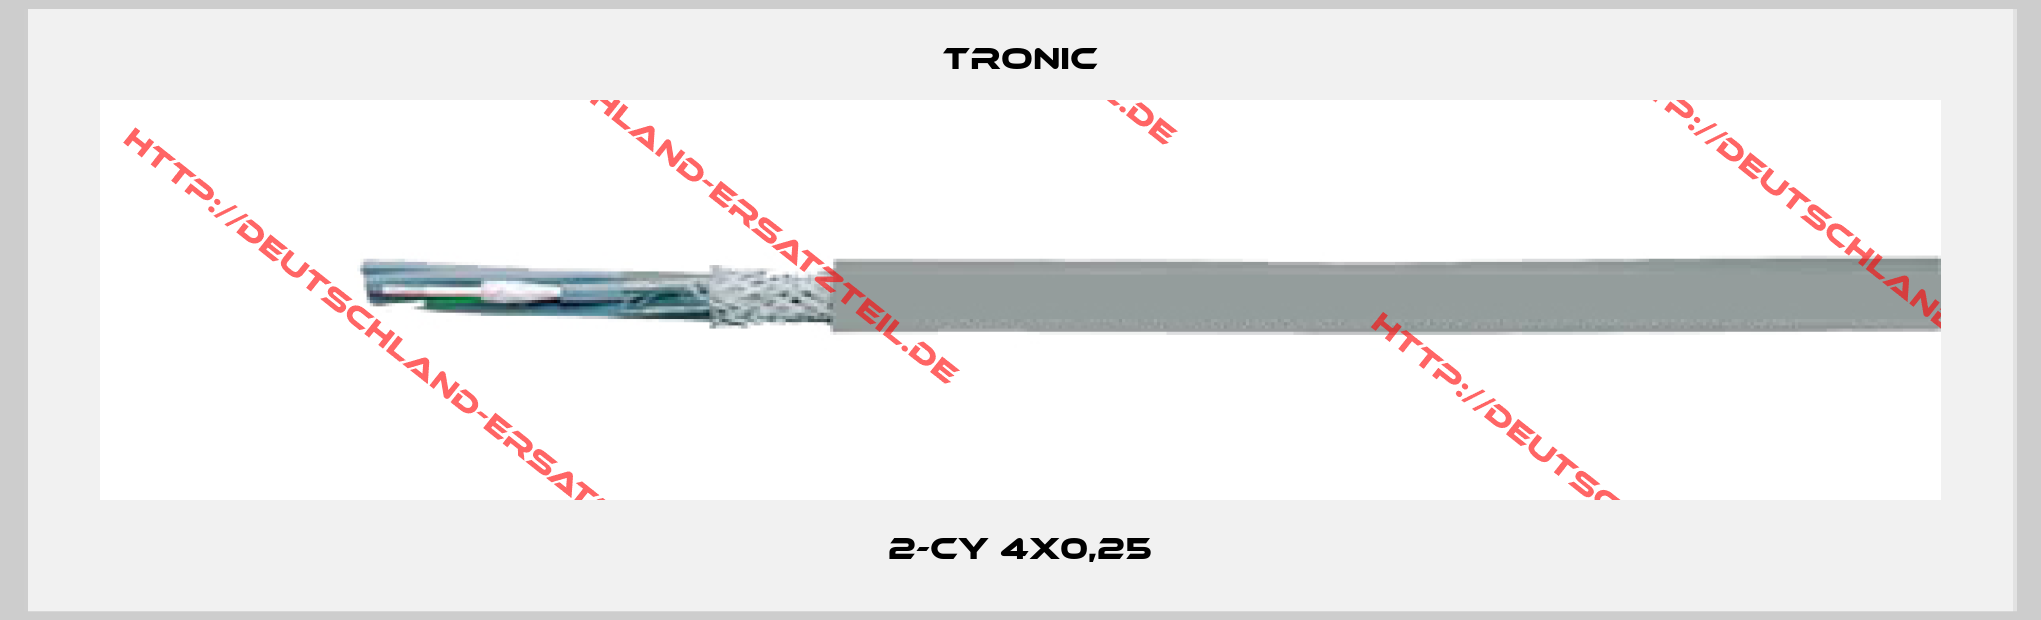 Tronic-2-CY 4x0,25